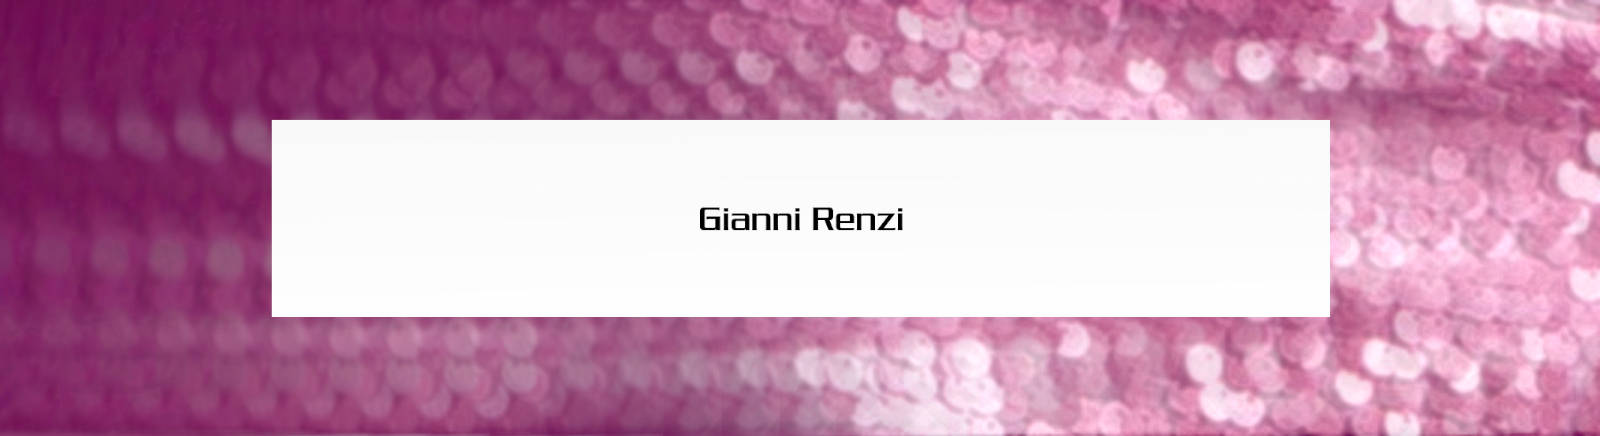 Prange: Gianni Renzi Combat Boots für Damen online shoppen